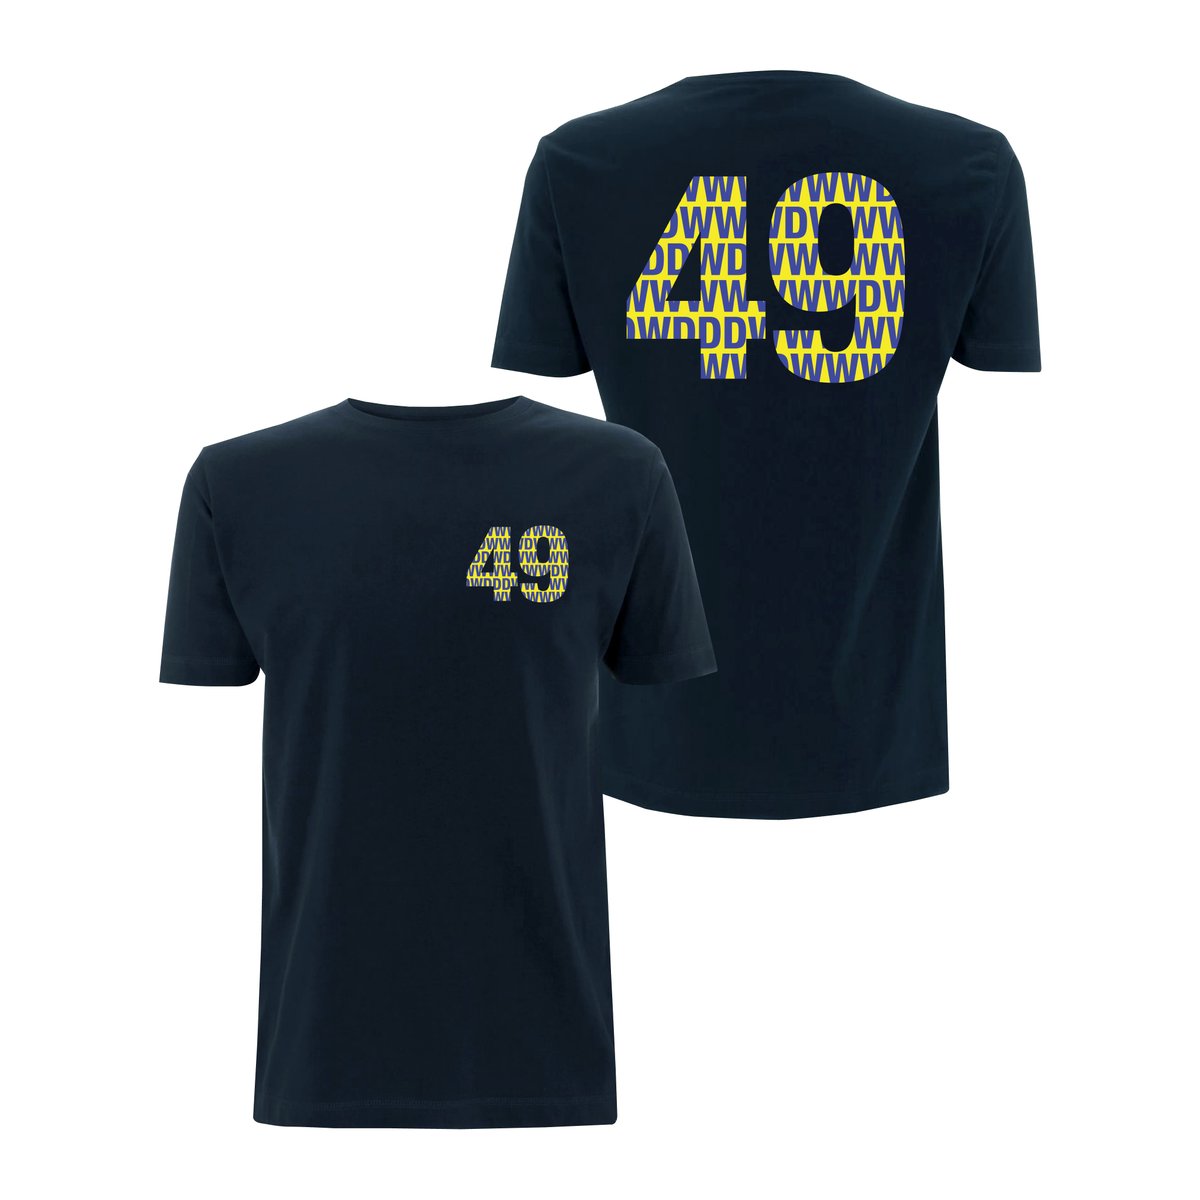 Image of 49 (a) shirt